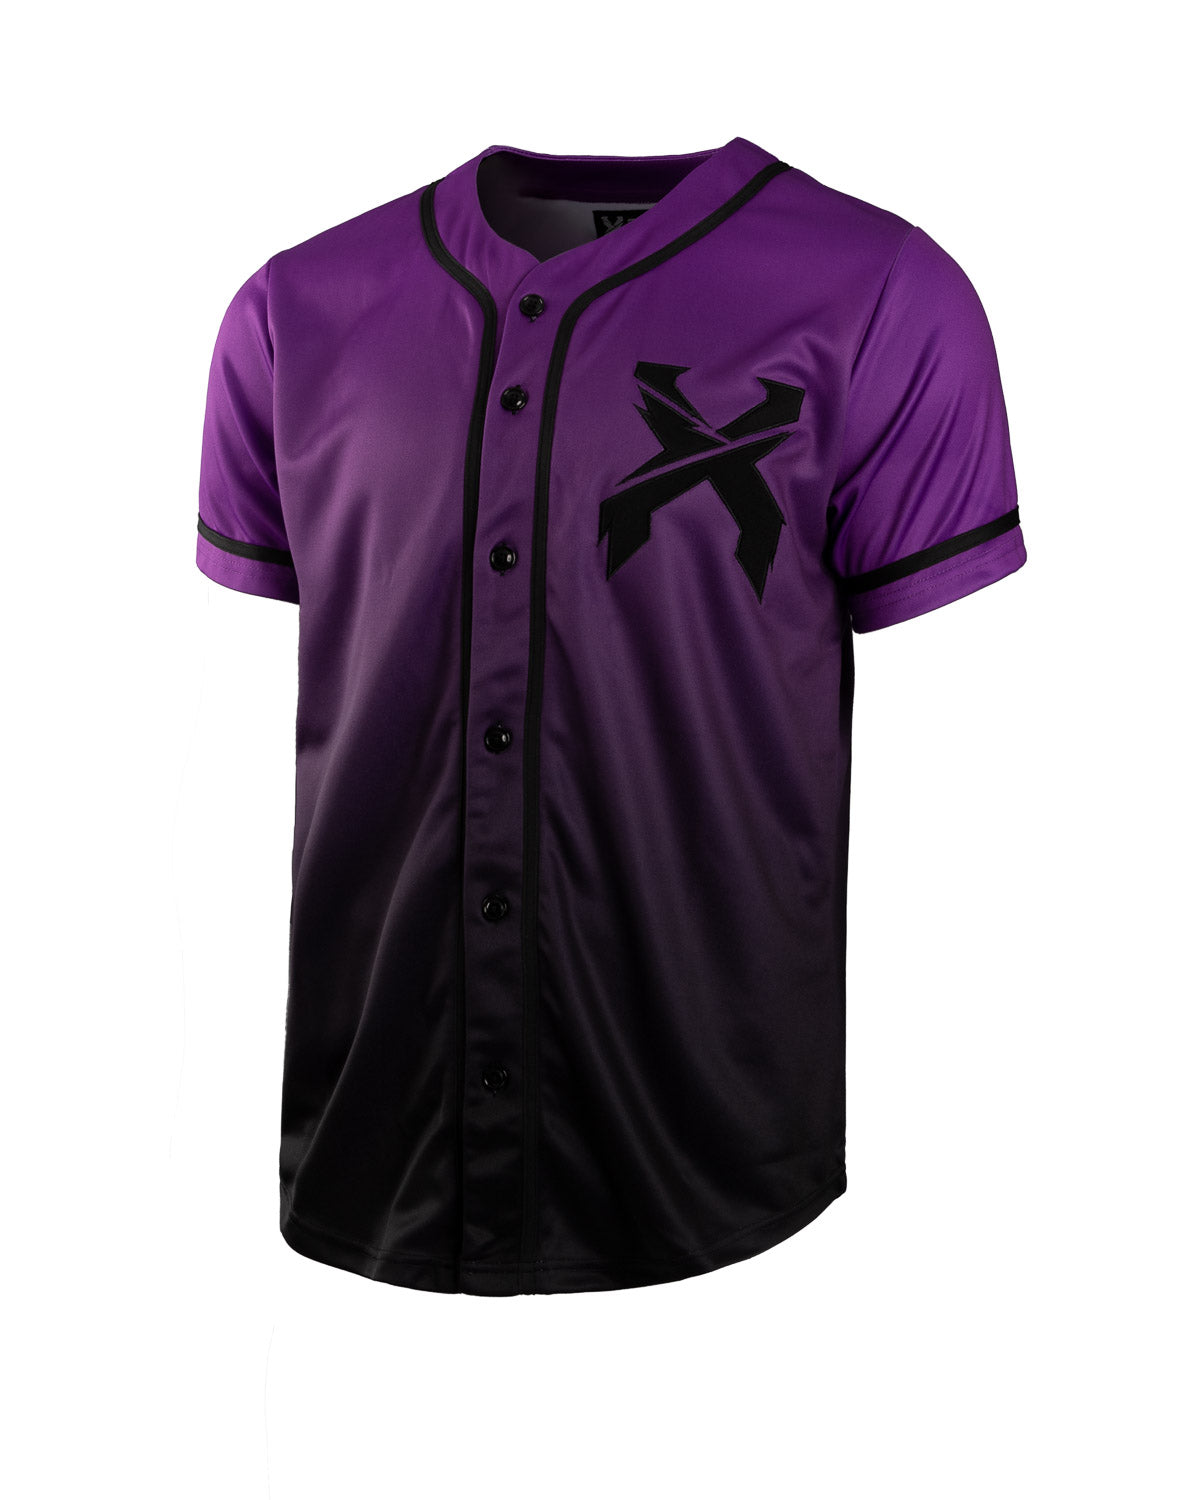 Headbanger Baseball Jersey (Purple/Black Gradient)